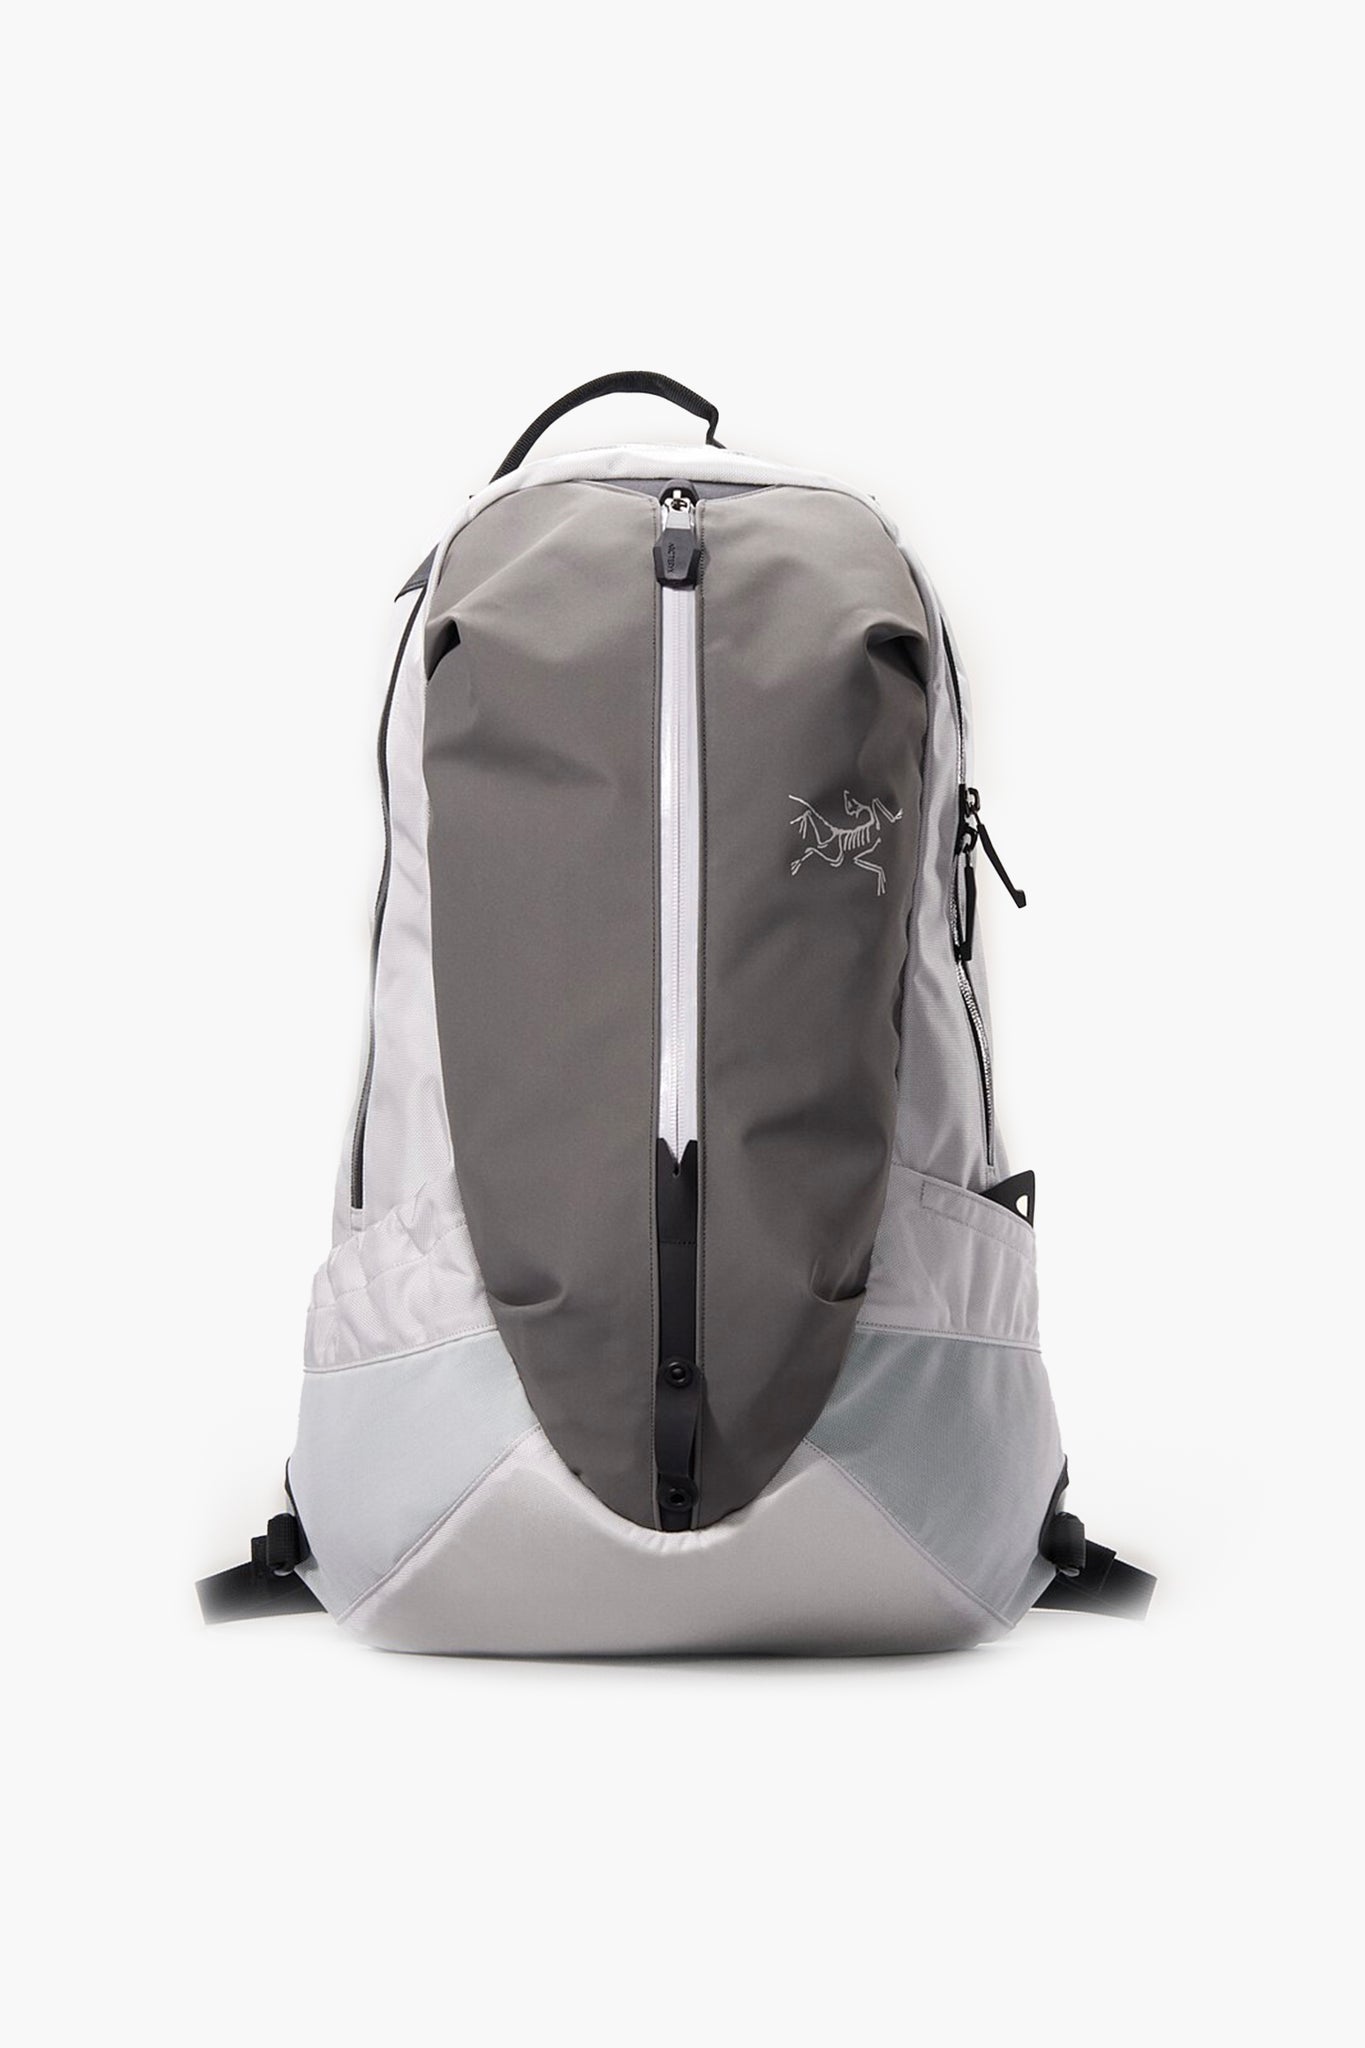 Arc'teryx Arro 22 Backpack in Atmos